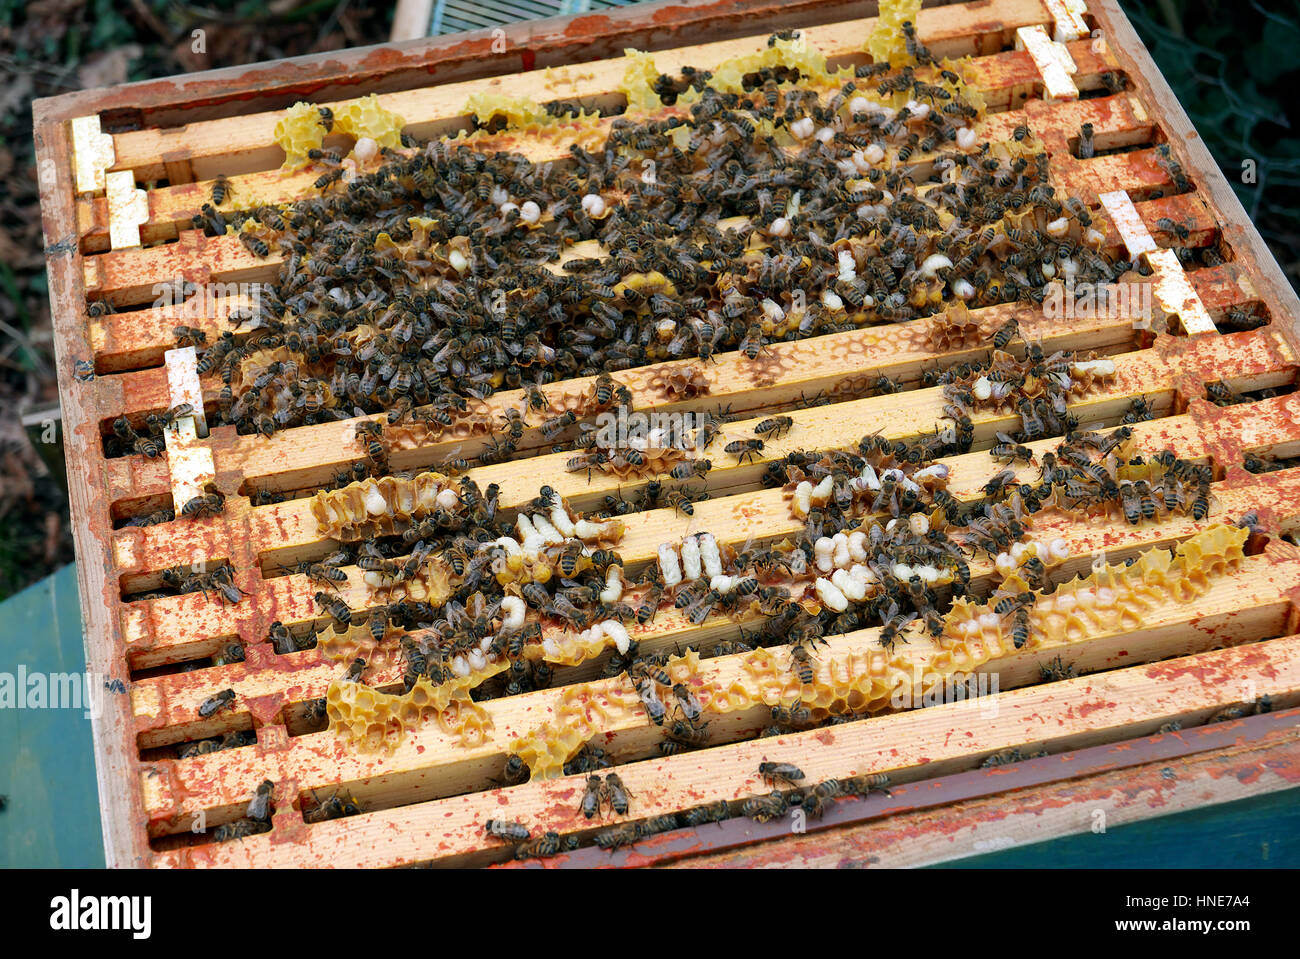 united kingdom london ealing urban beekeeping in back garden Stock Photo